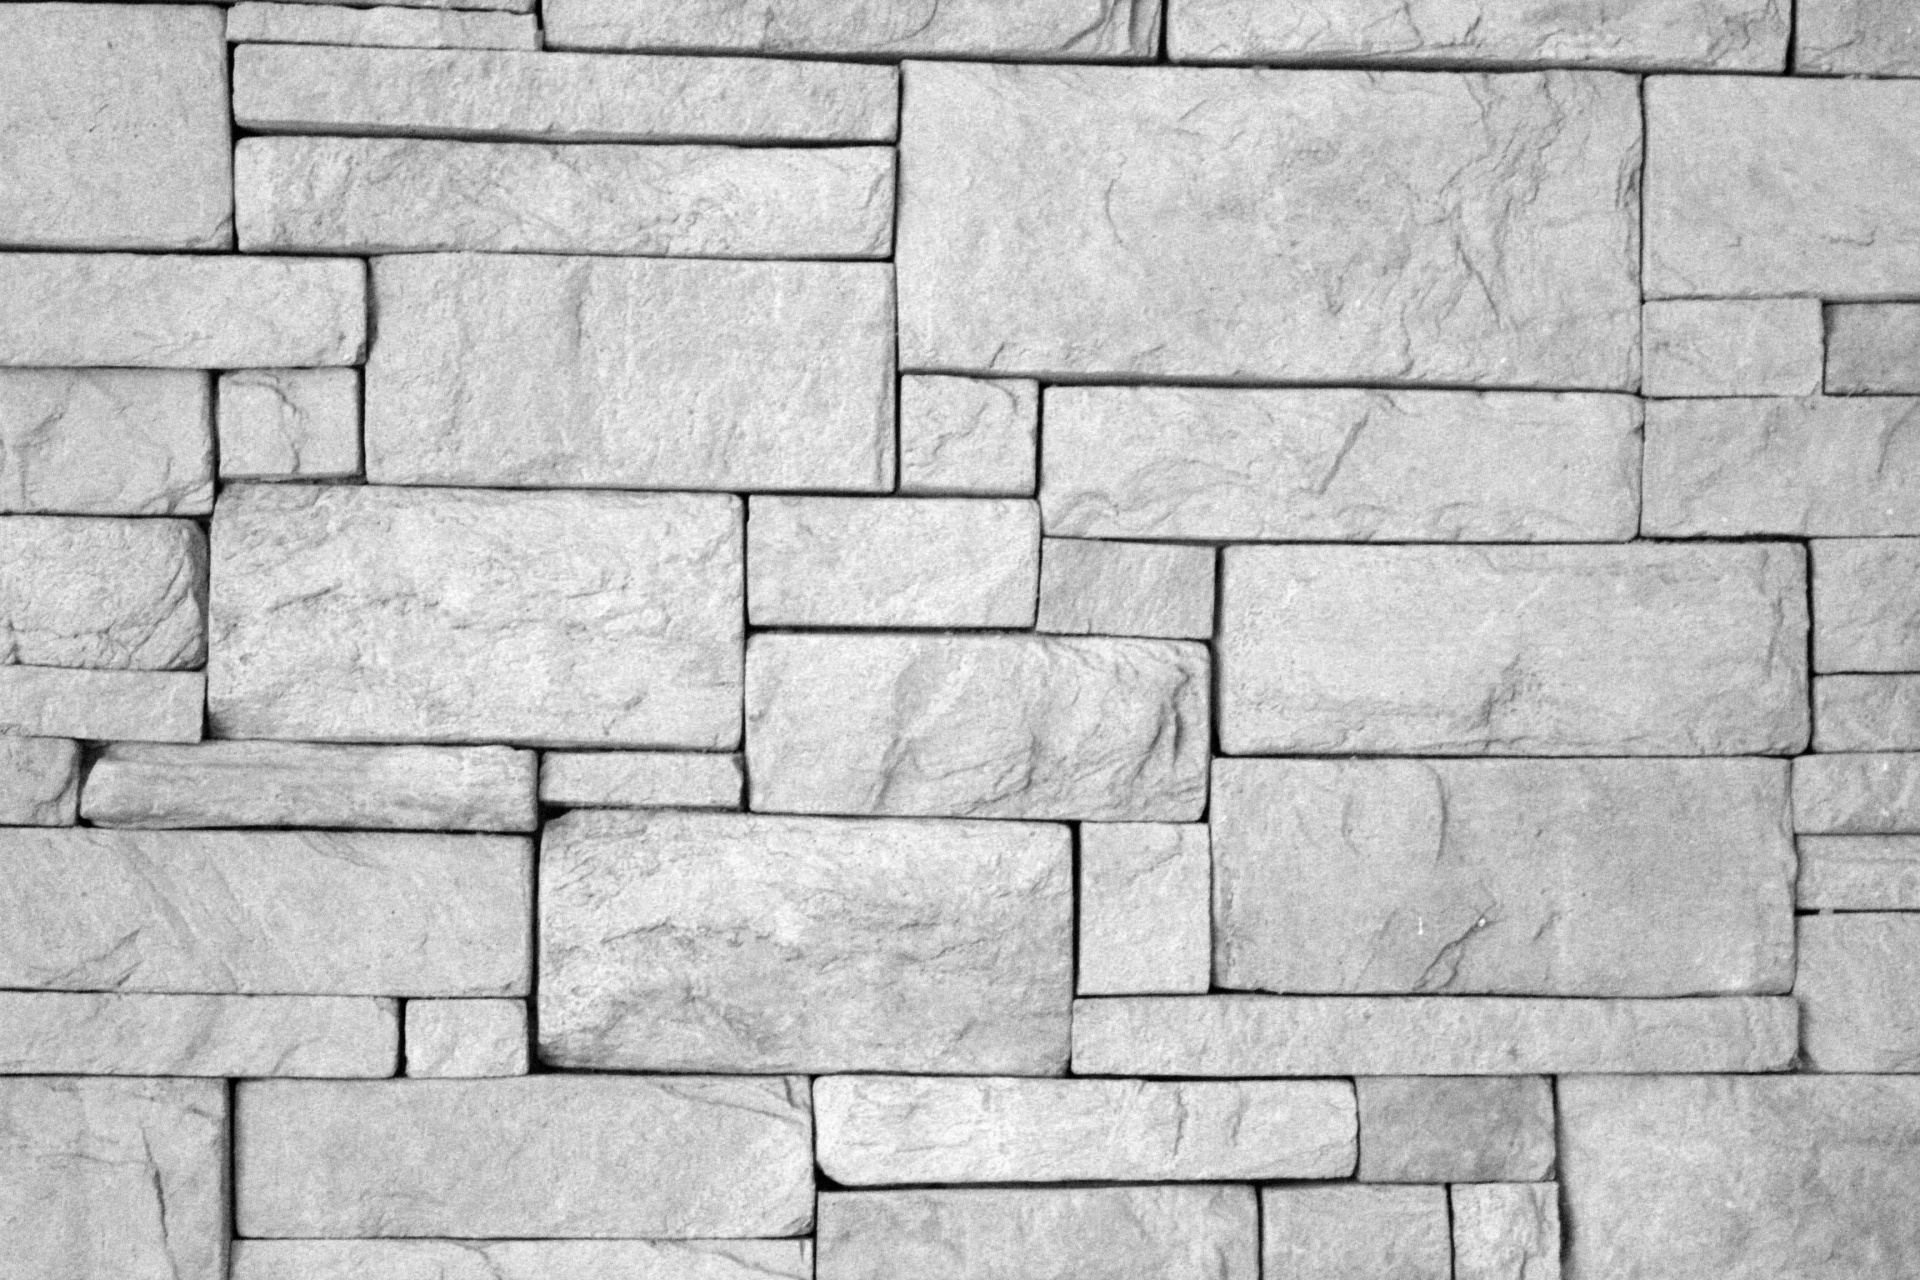 Black And White Brick Wall